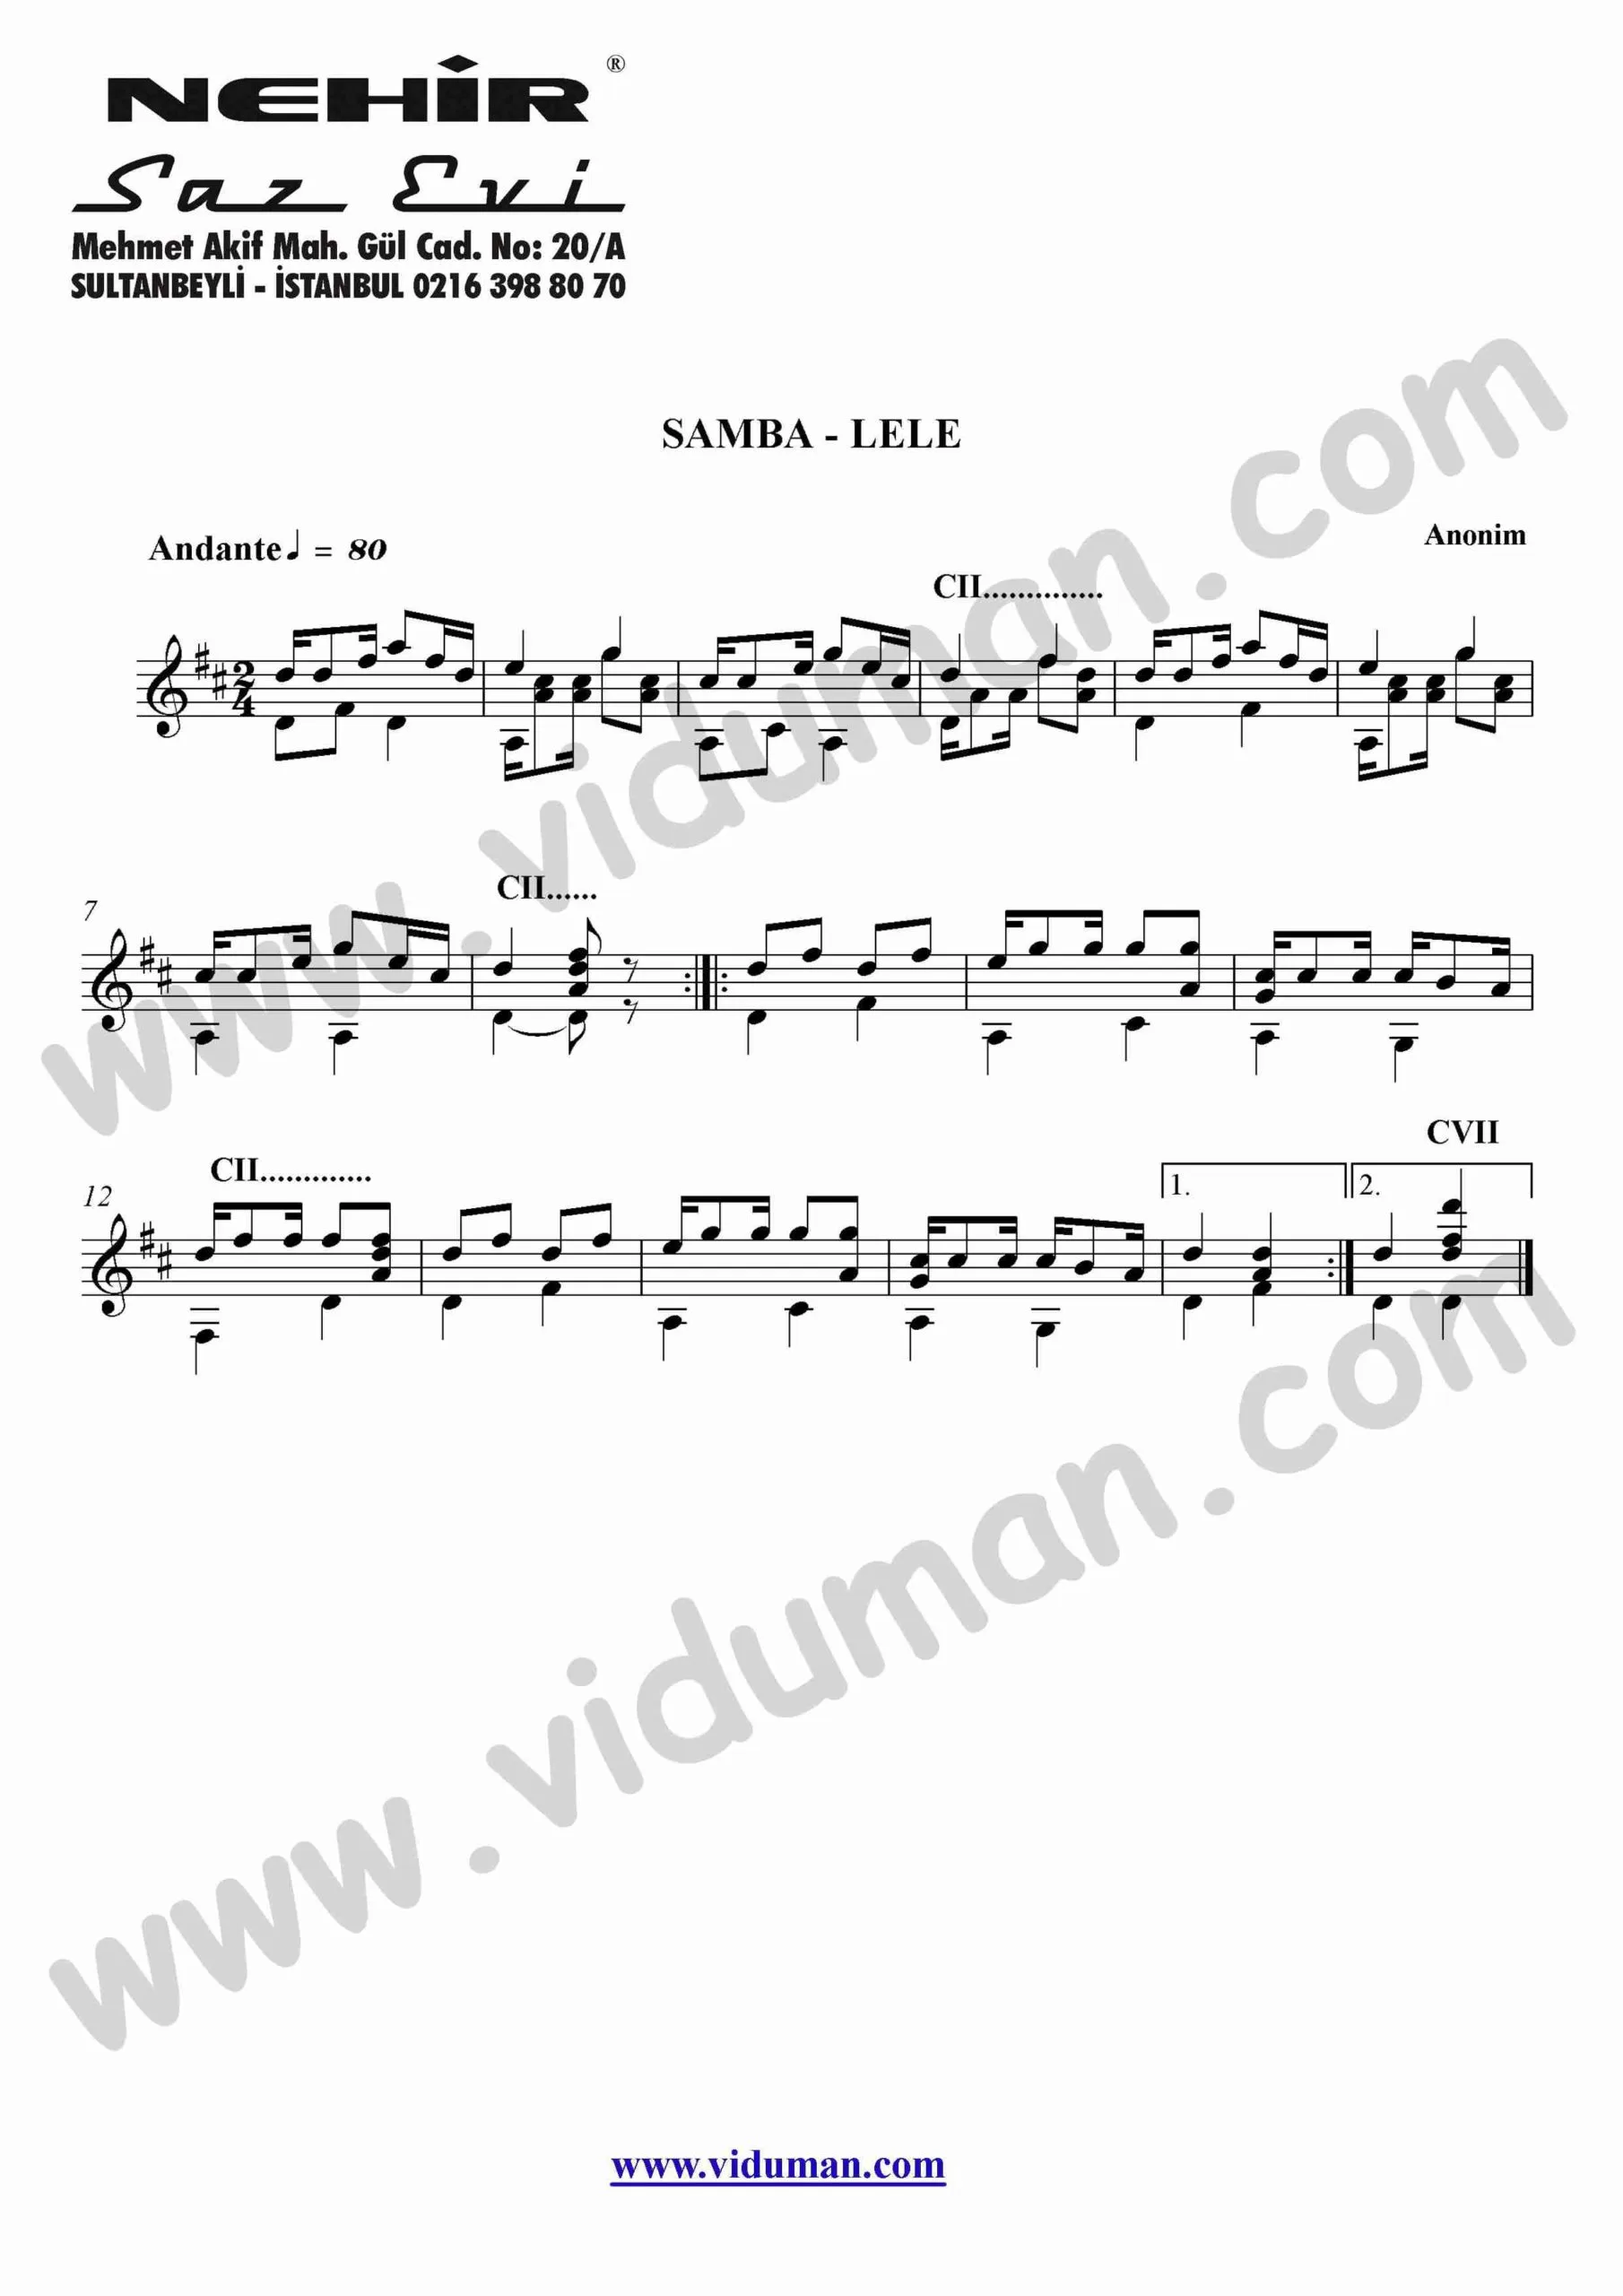 61- Samba - Lele (Anonim)